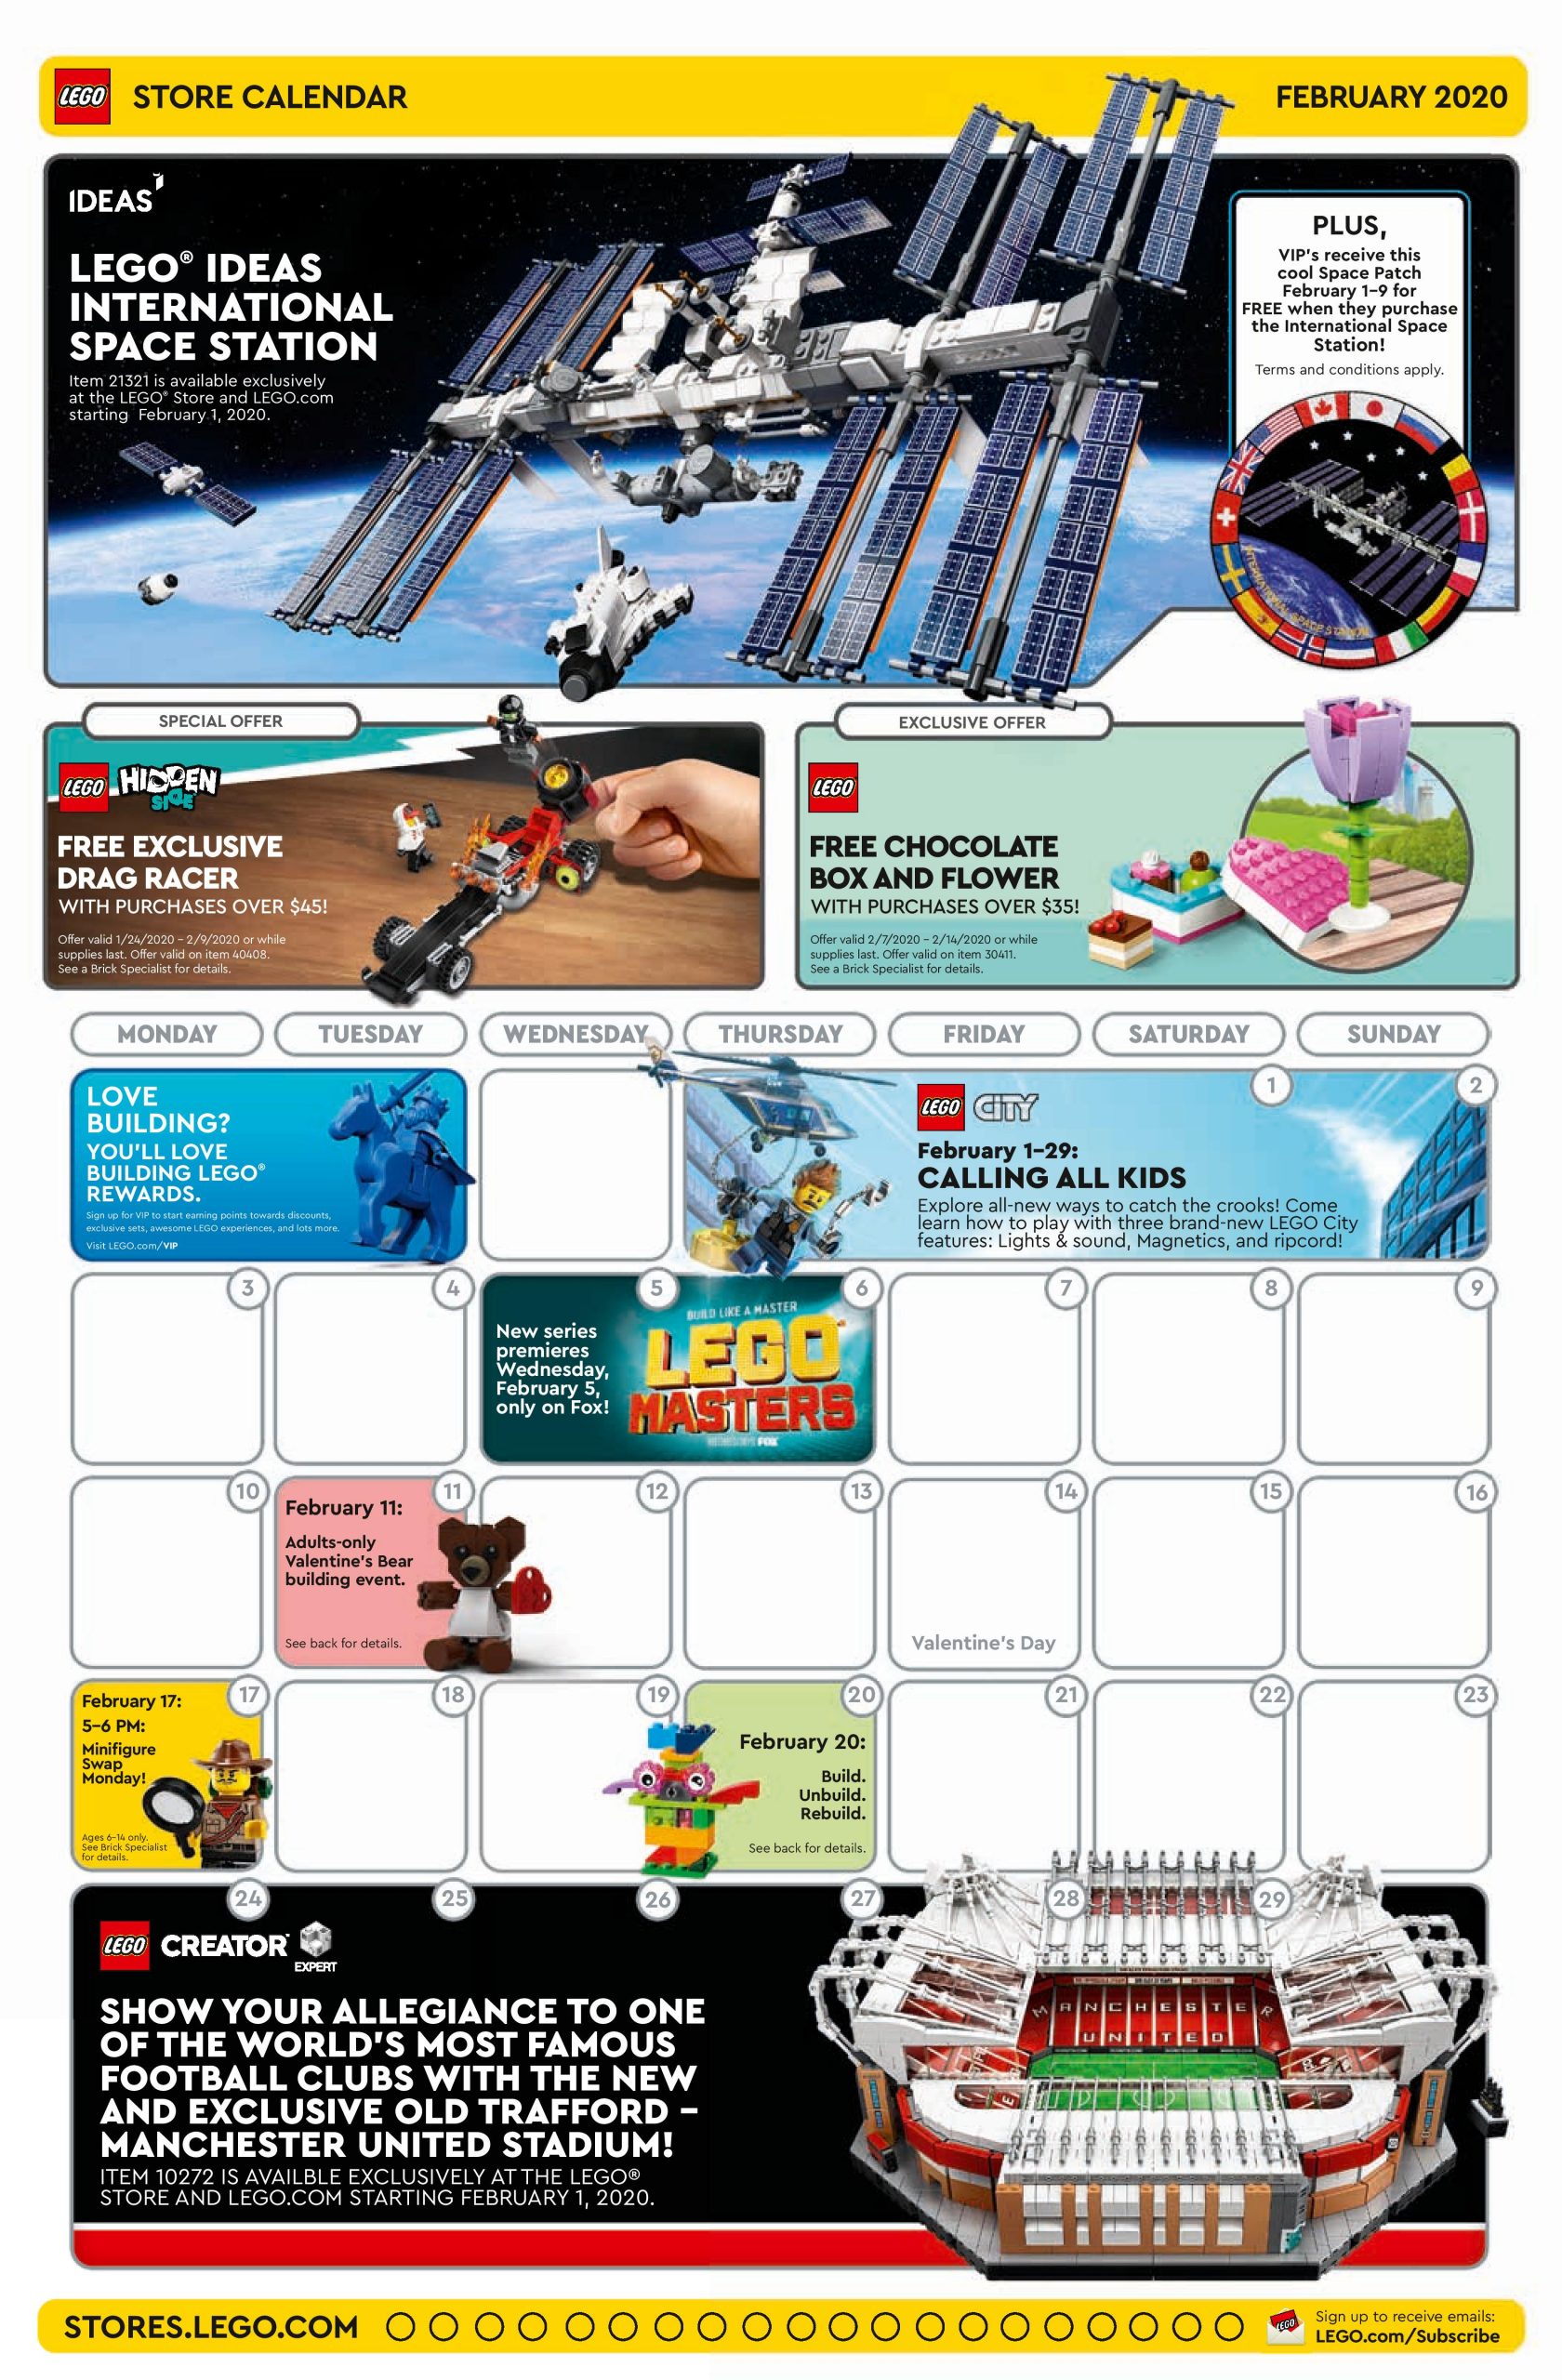 Lego Store Calendar Customize and Print